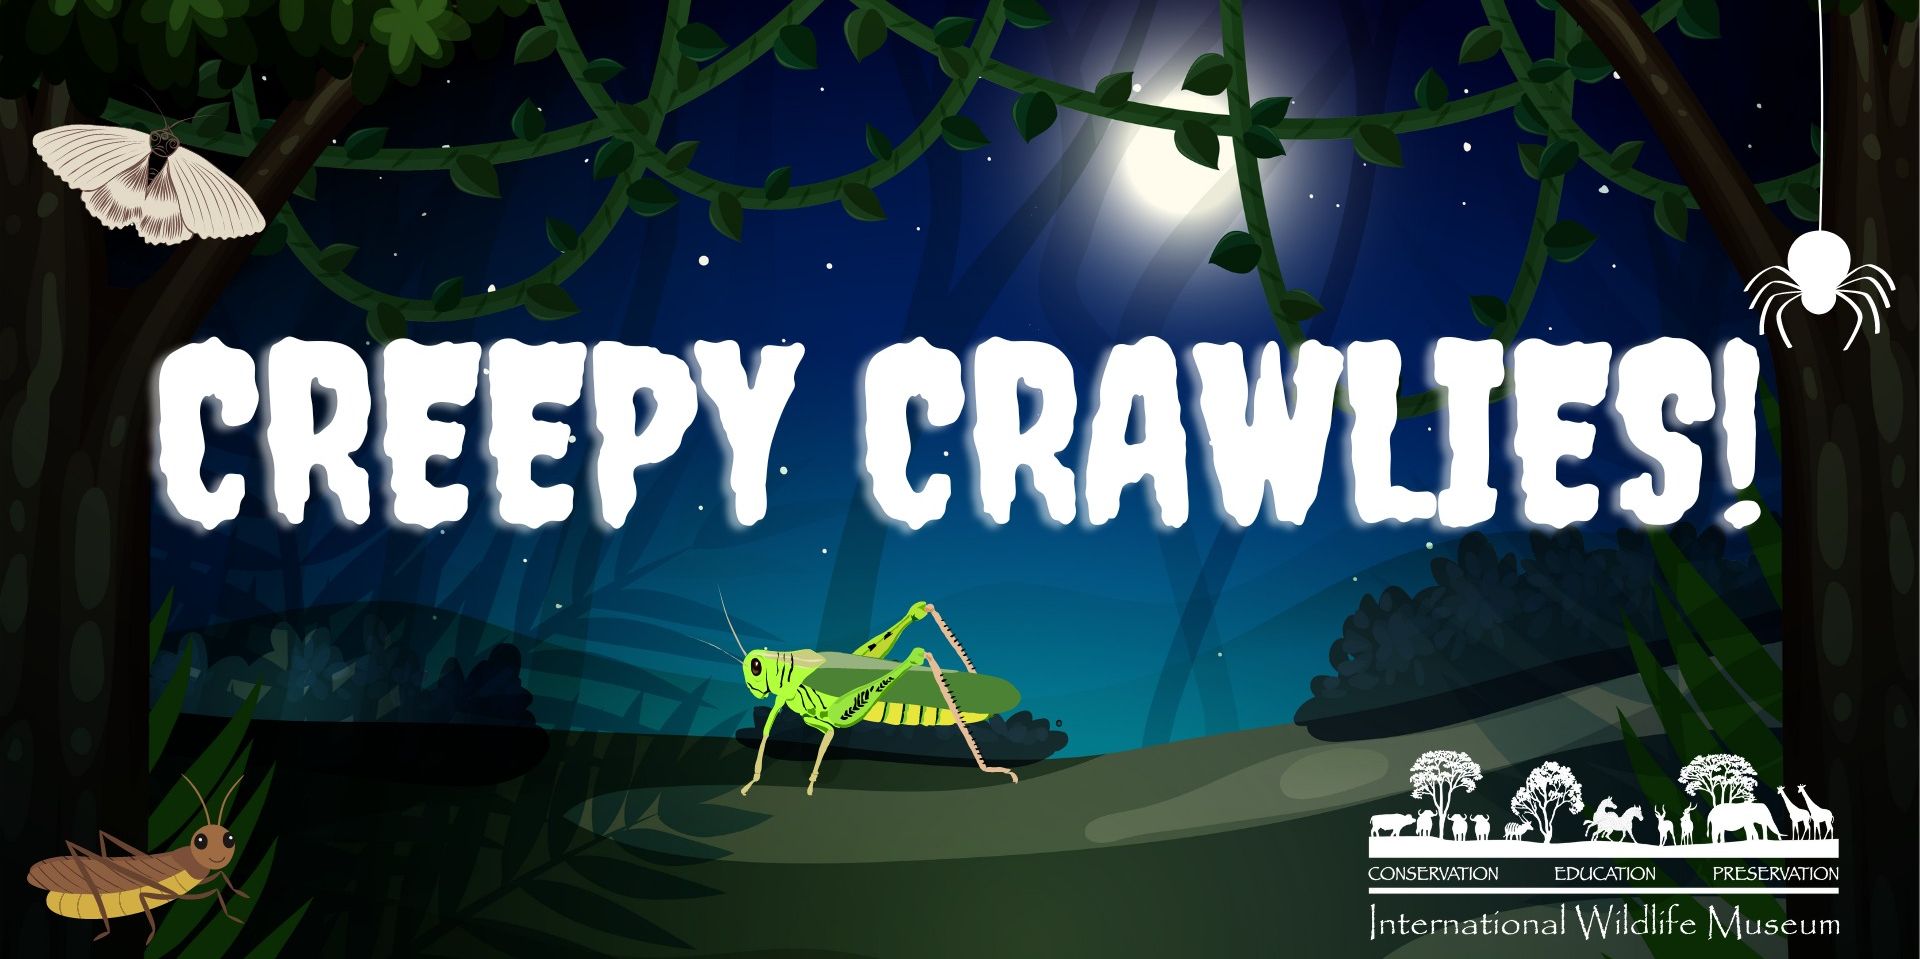 Creepy Crawlies promotional image